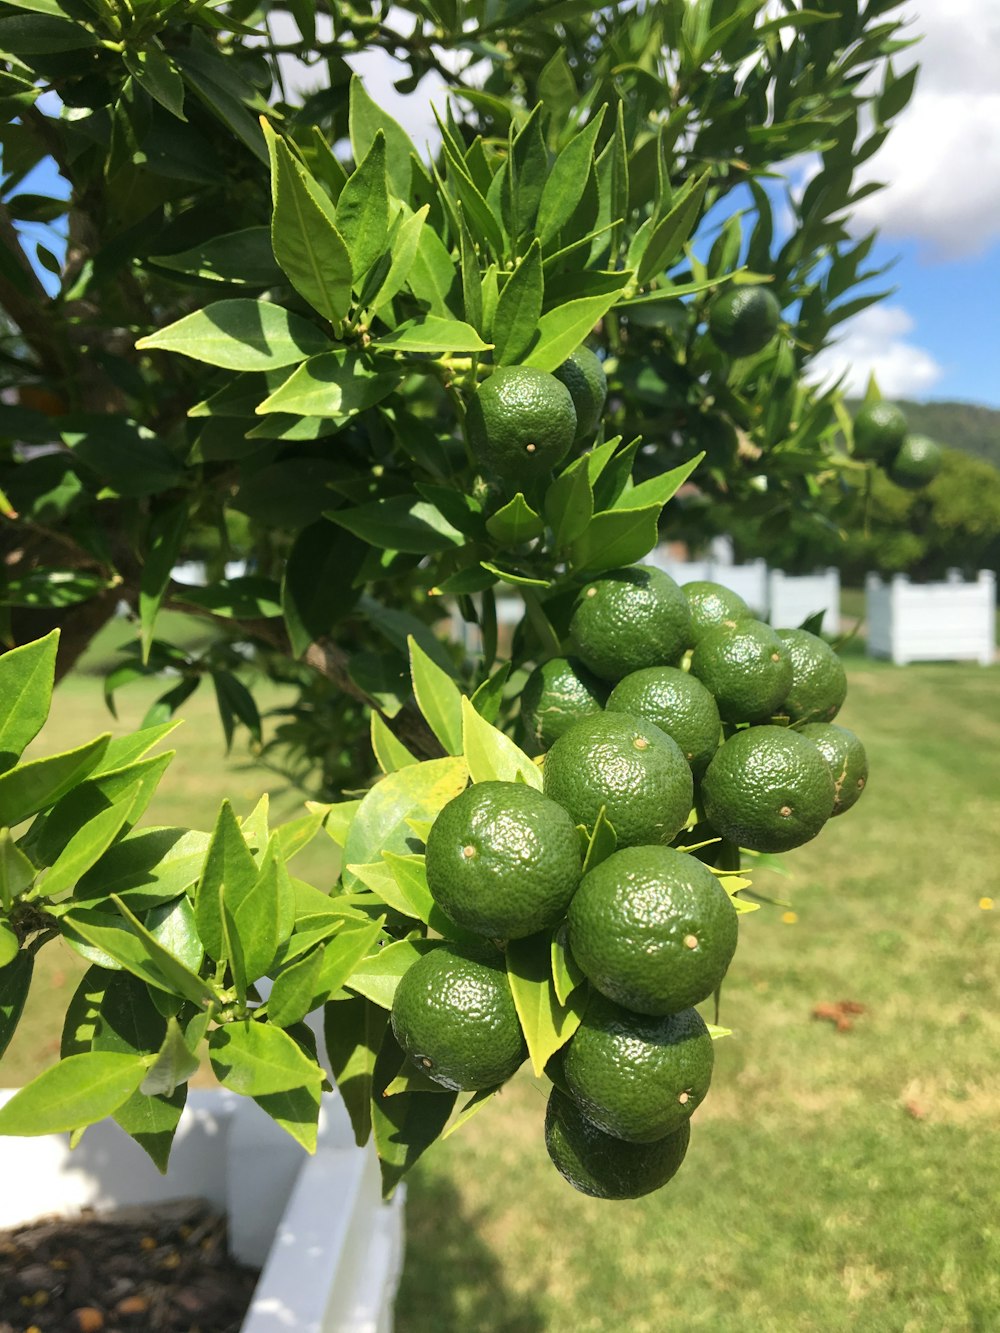 round green fruits at daytime